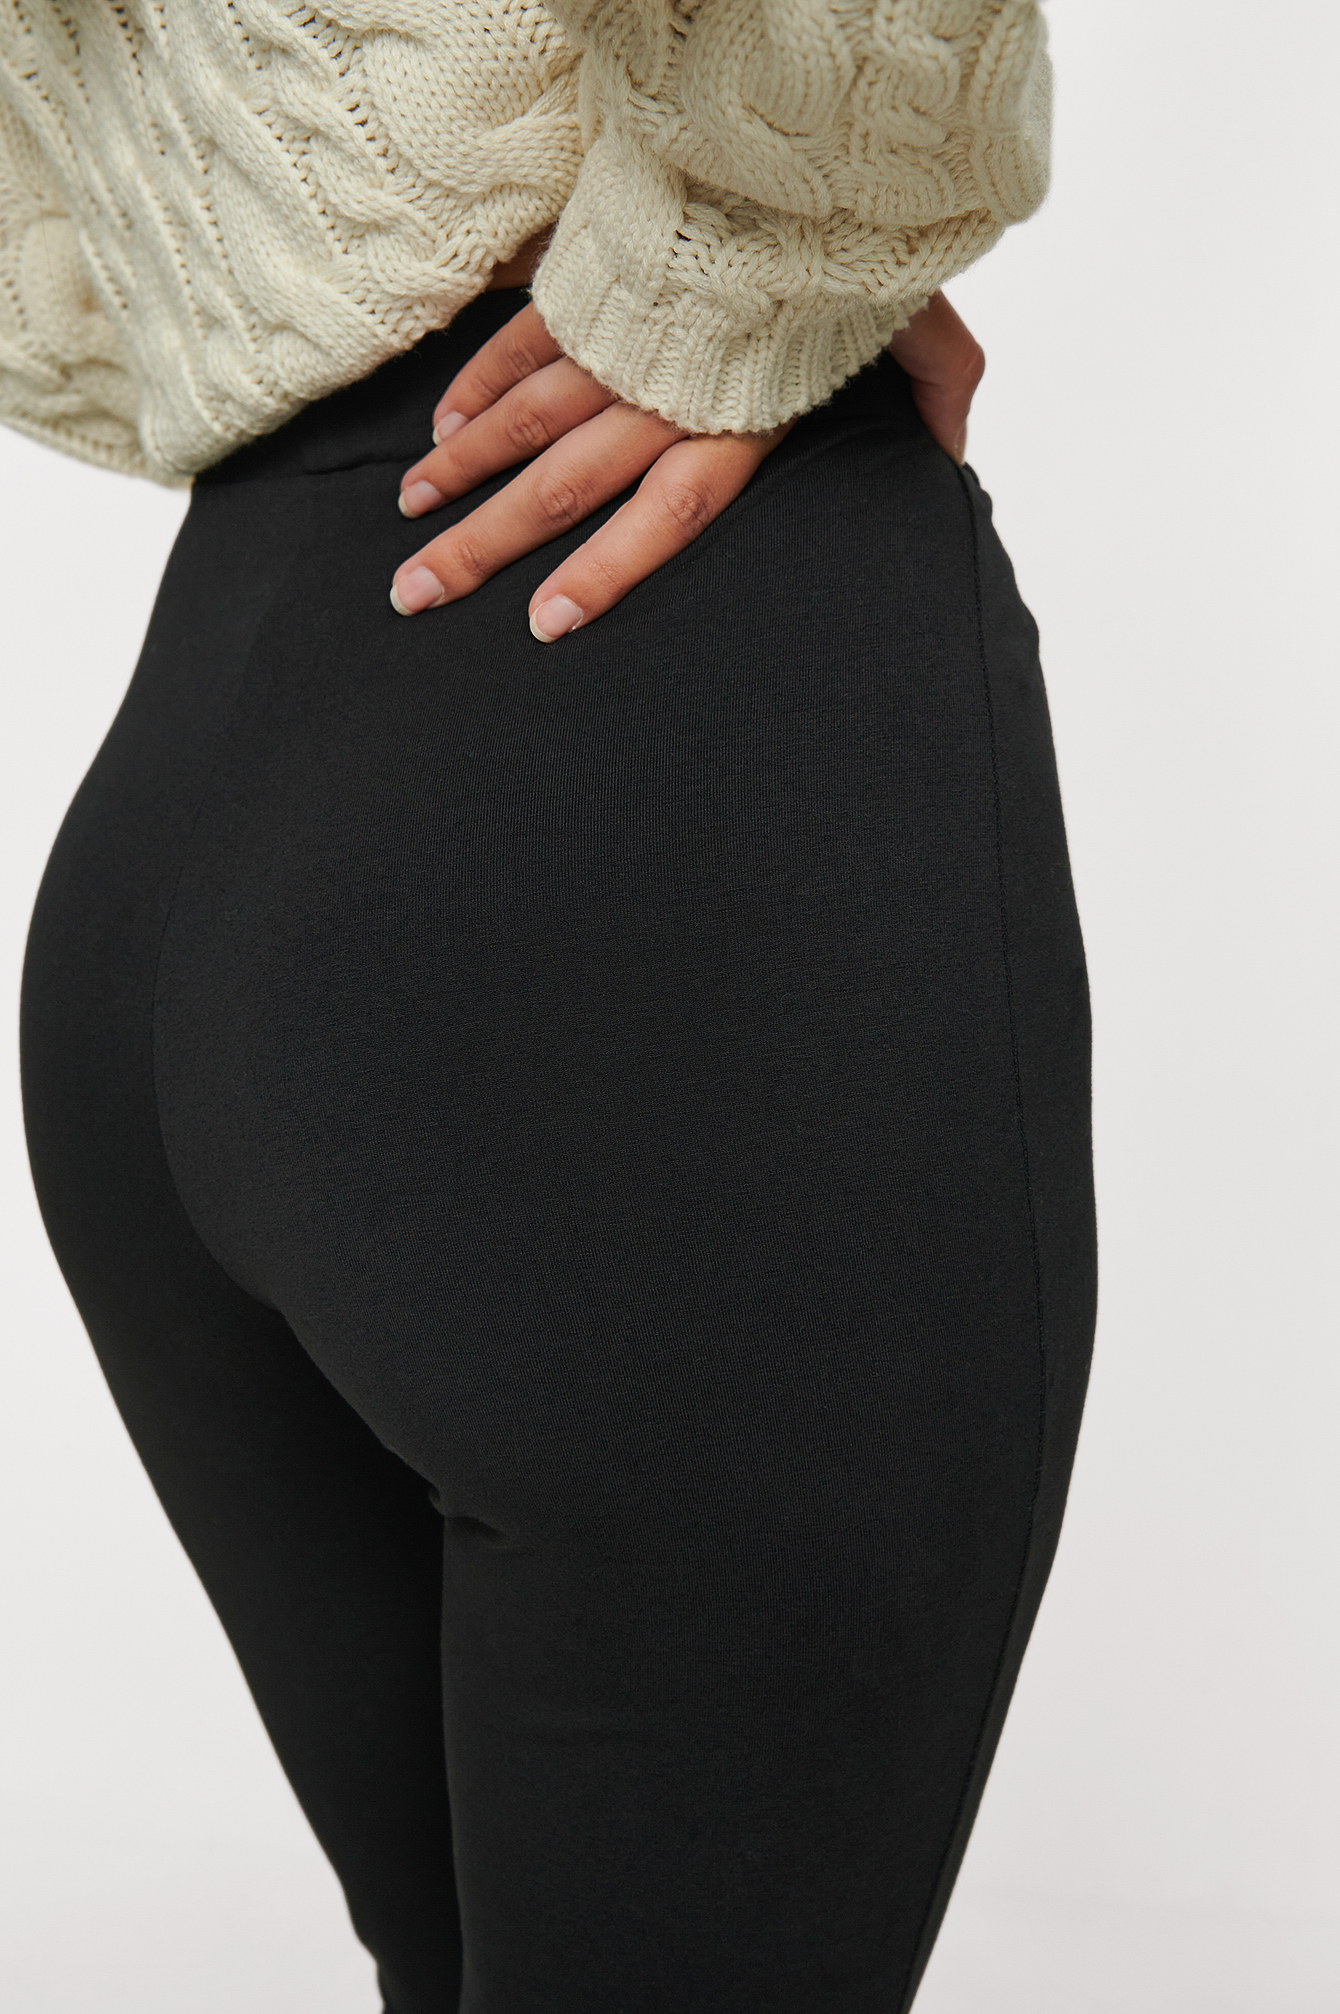 njshnmn Women Bootcut Yoga Pants with Pockets Leggings High Waist